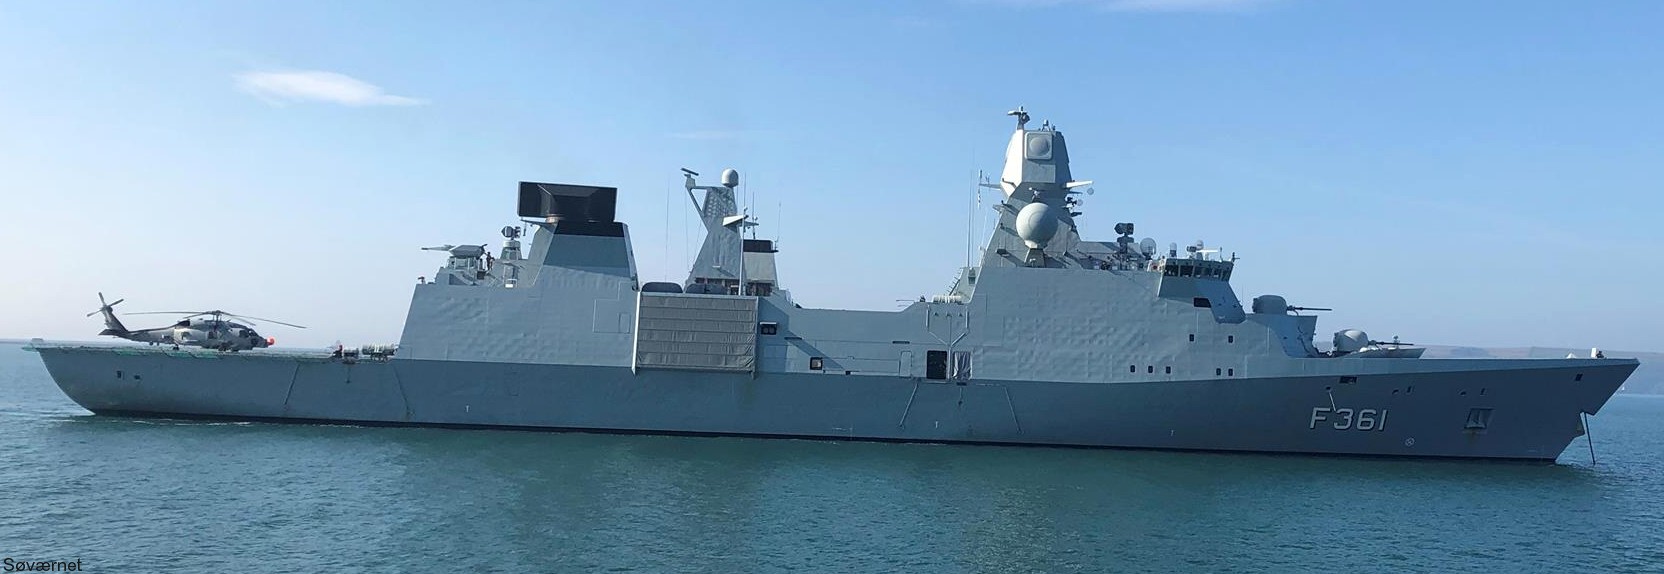 f-361 hdms iver huitfeldt class guided missile frigate ffg royal danish navy 39